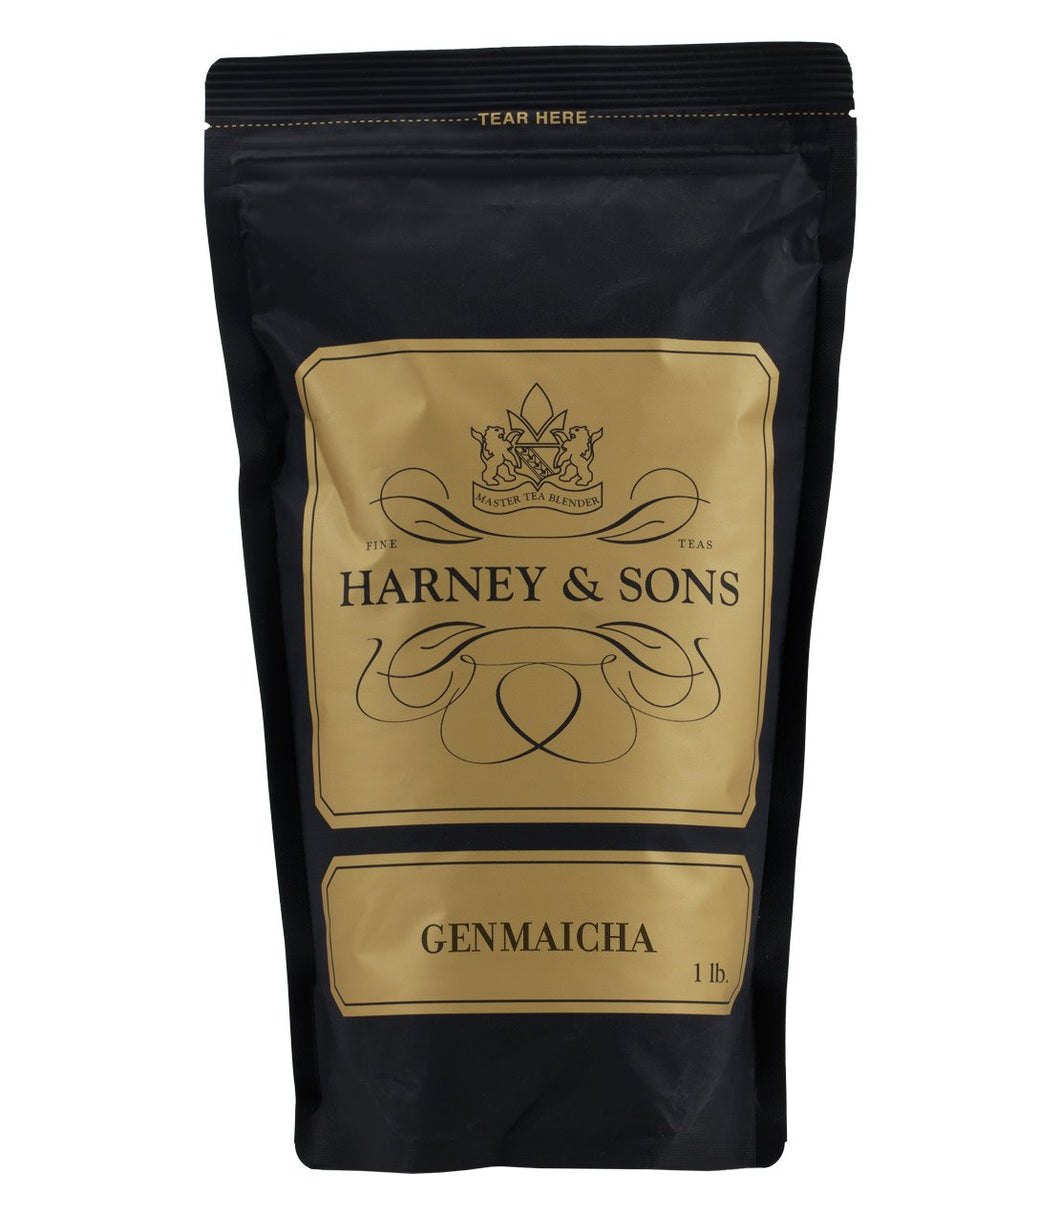 Harney & Sons - Genmaicha